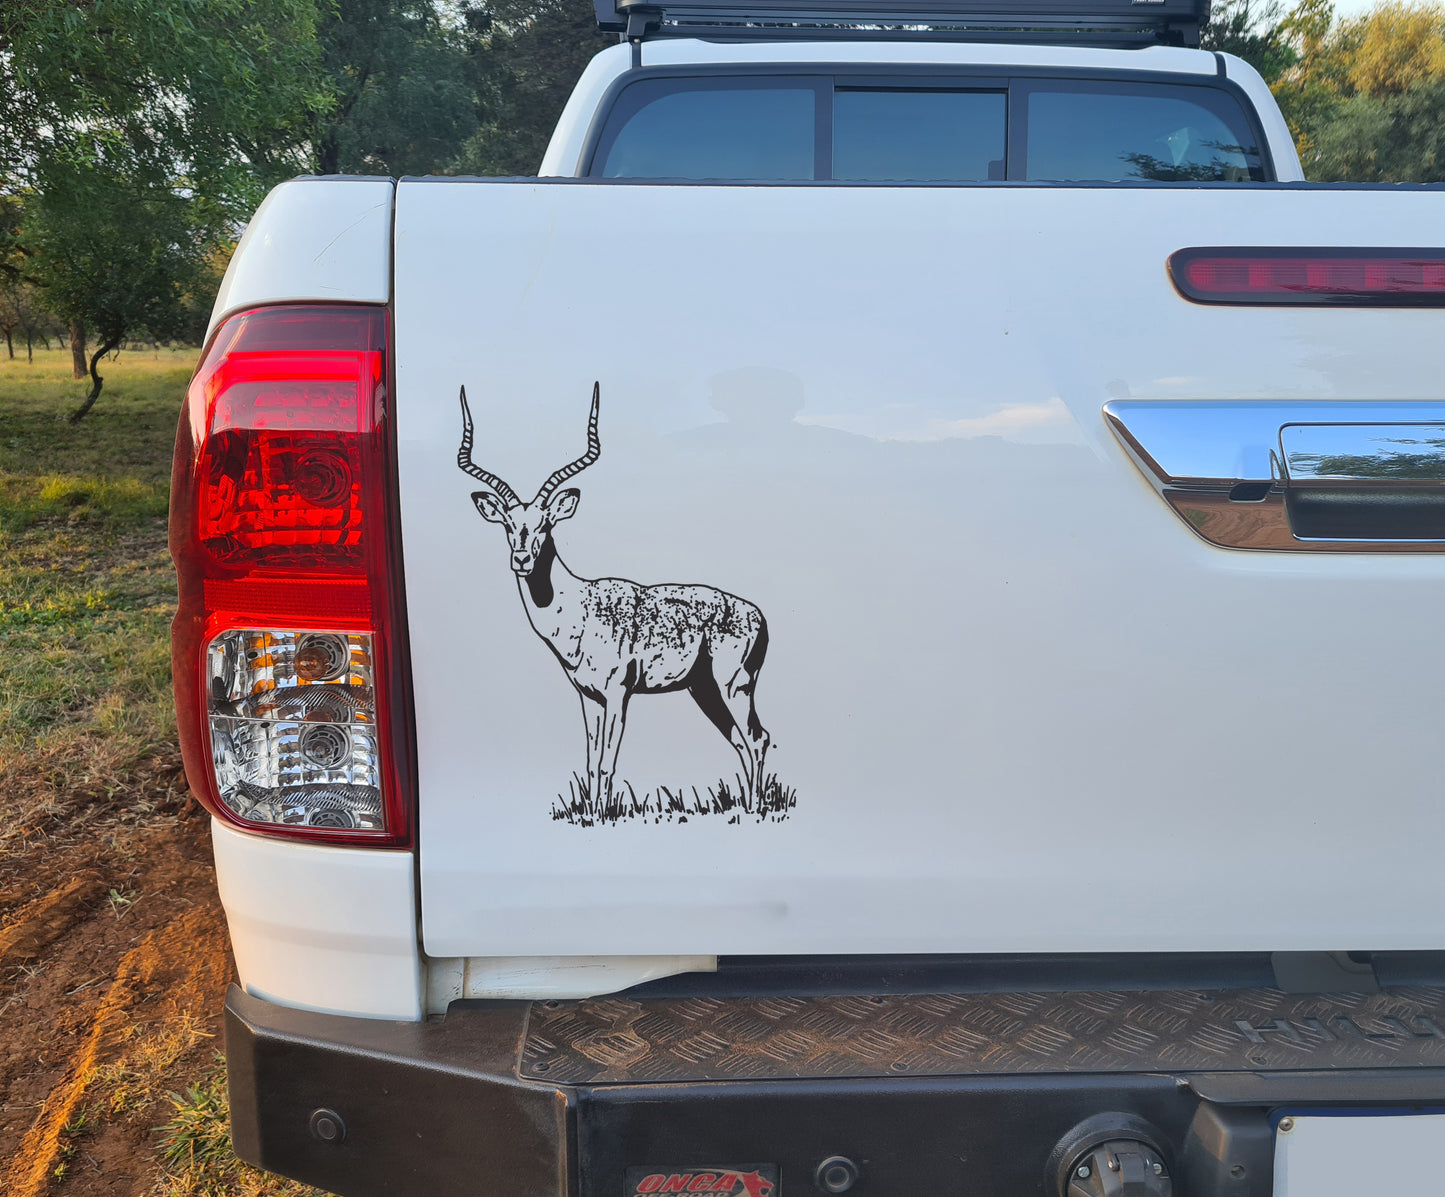 Rooibok Impala Rams Antelope Bakkie Car Wall Vinyl Decal Sticker Art